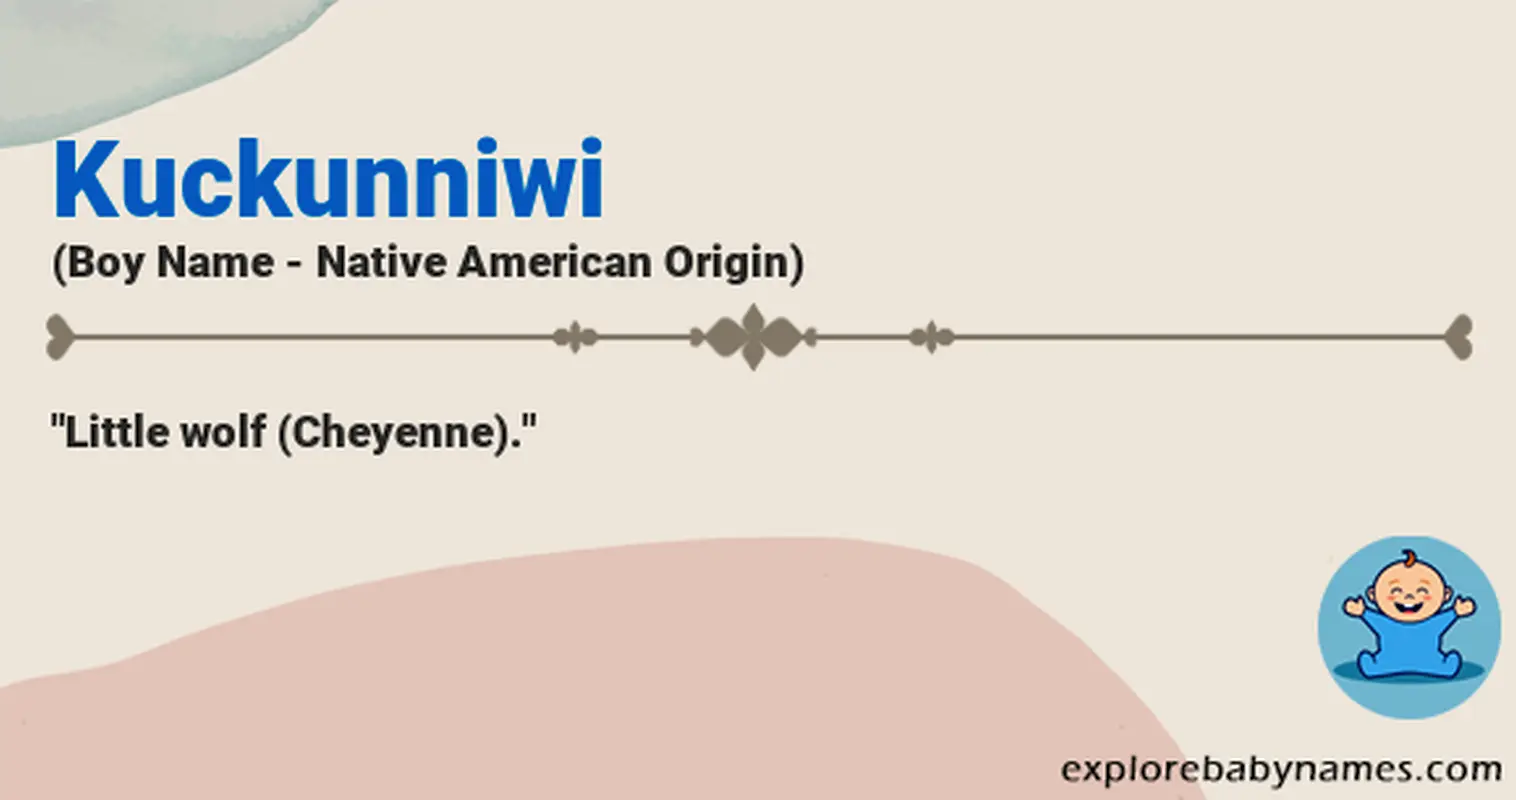 Meaning of Kuckunniwi